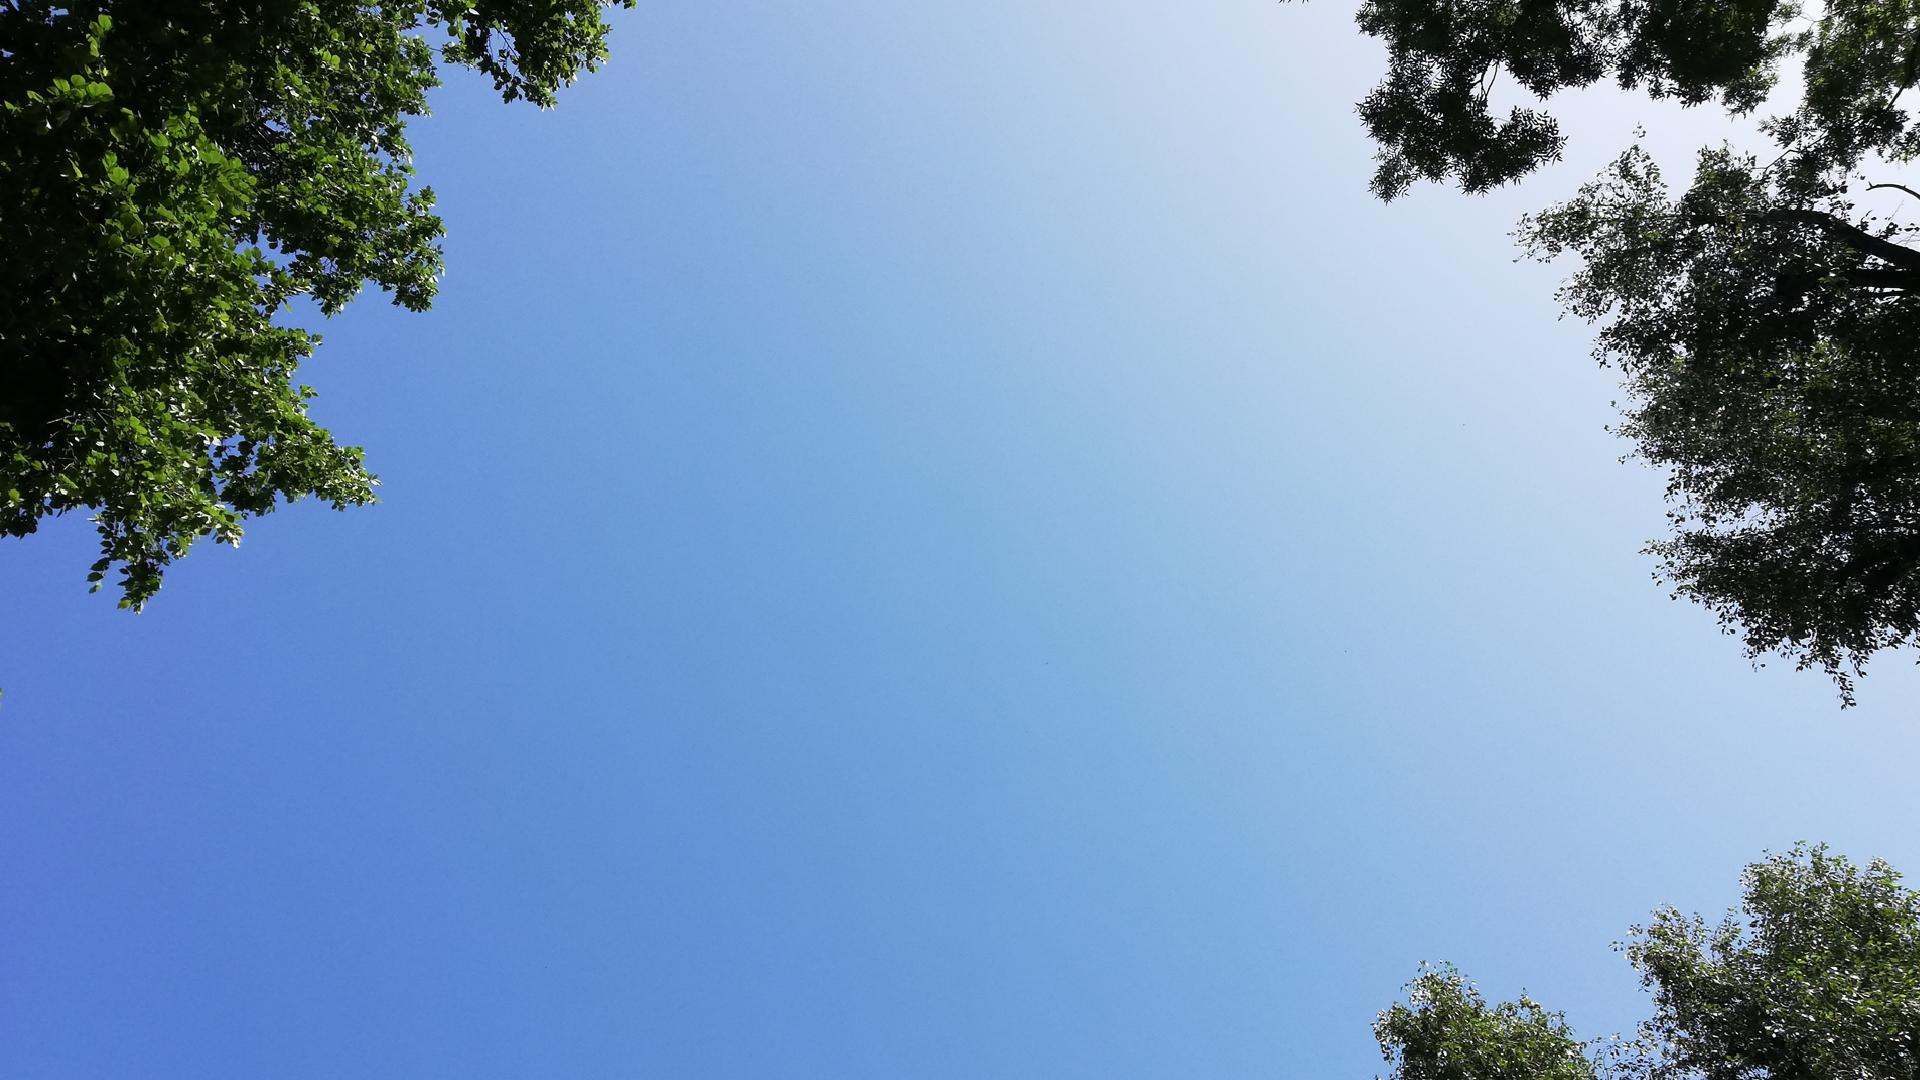 Sunny blue sky with treetops around the edge.